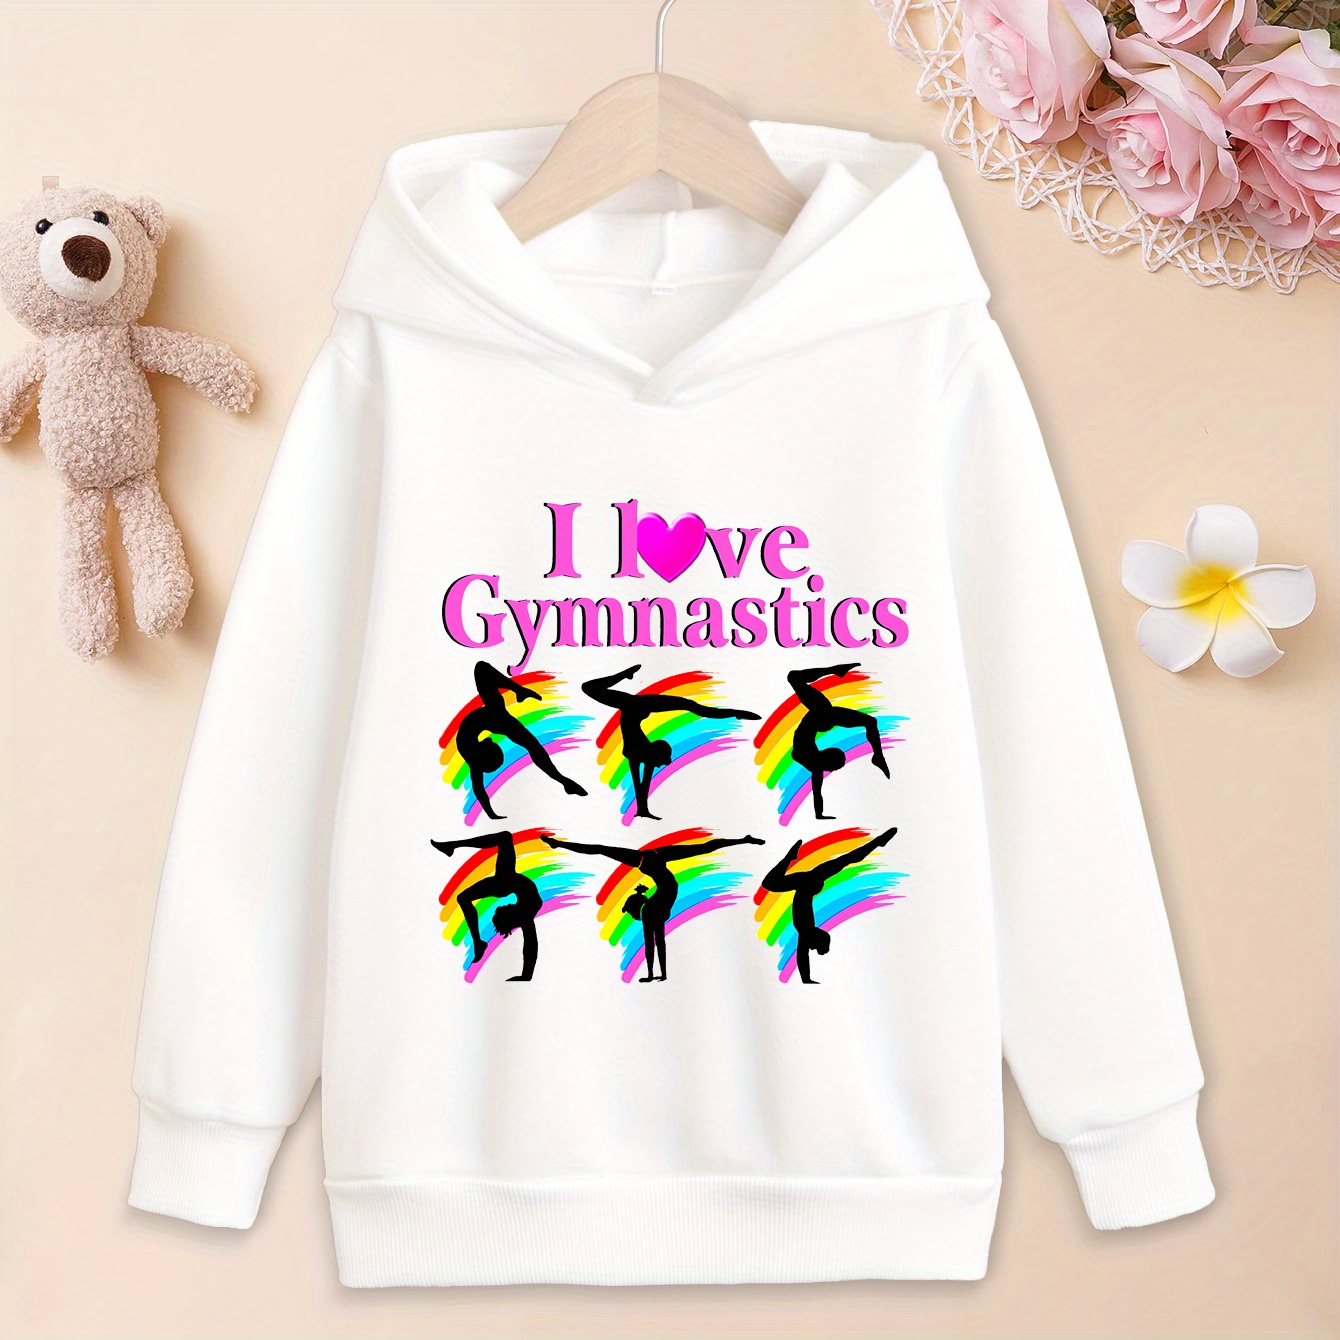 

Love Gymnastics Print, Girls Casual Hoodies Long Sleeve Pullover Tops Hooded Sweatshirts For Sports Outdoor, Teens Clothing